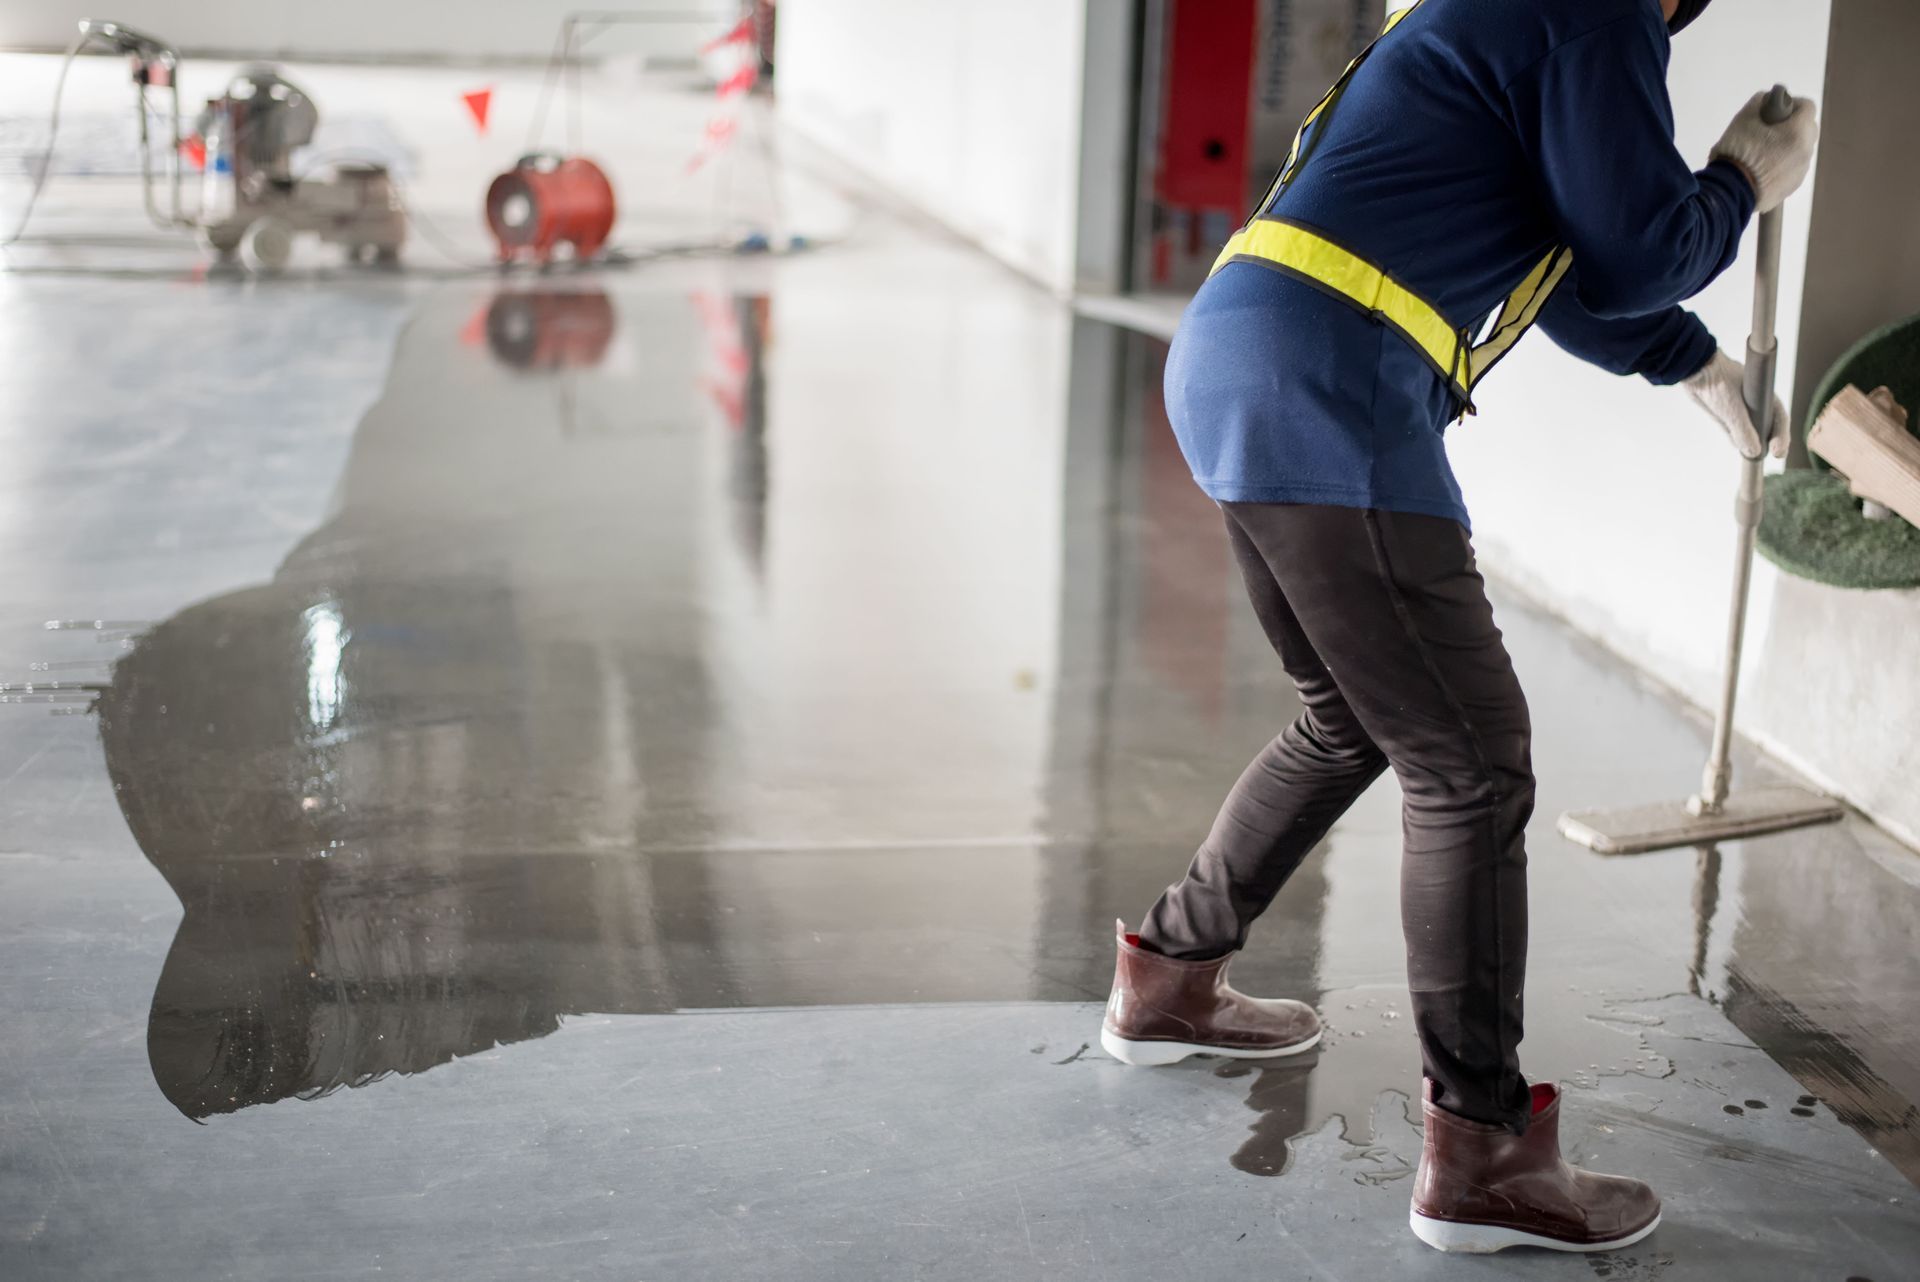 commercial epoxy floor coating